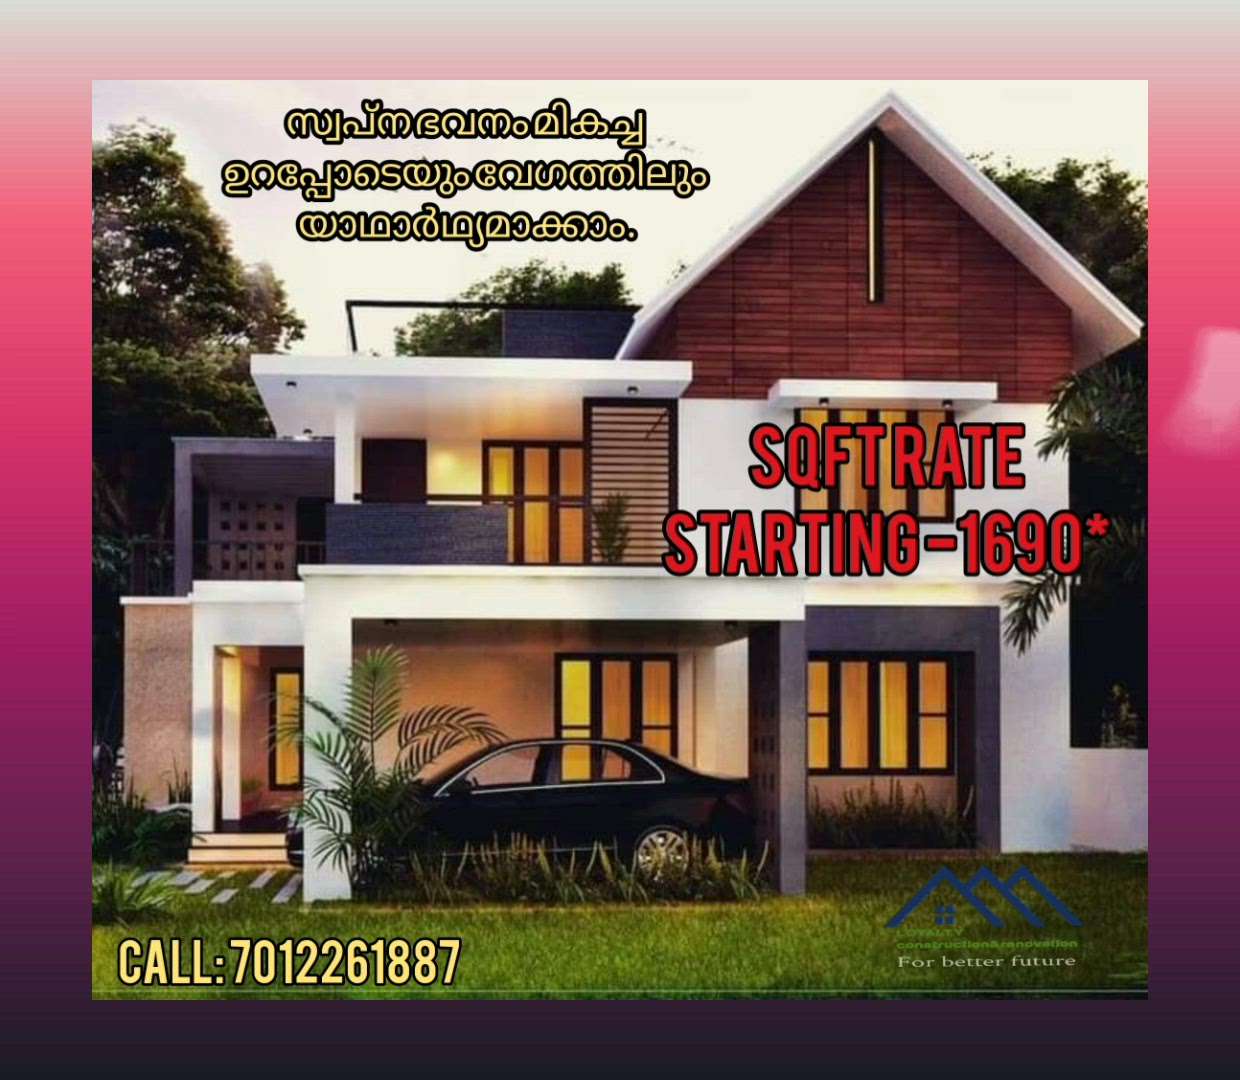 LOYALTY constructions & Renovation Thrissur Kerala
call:7012261887